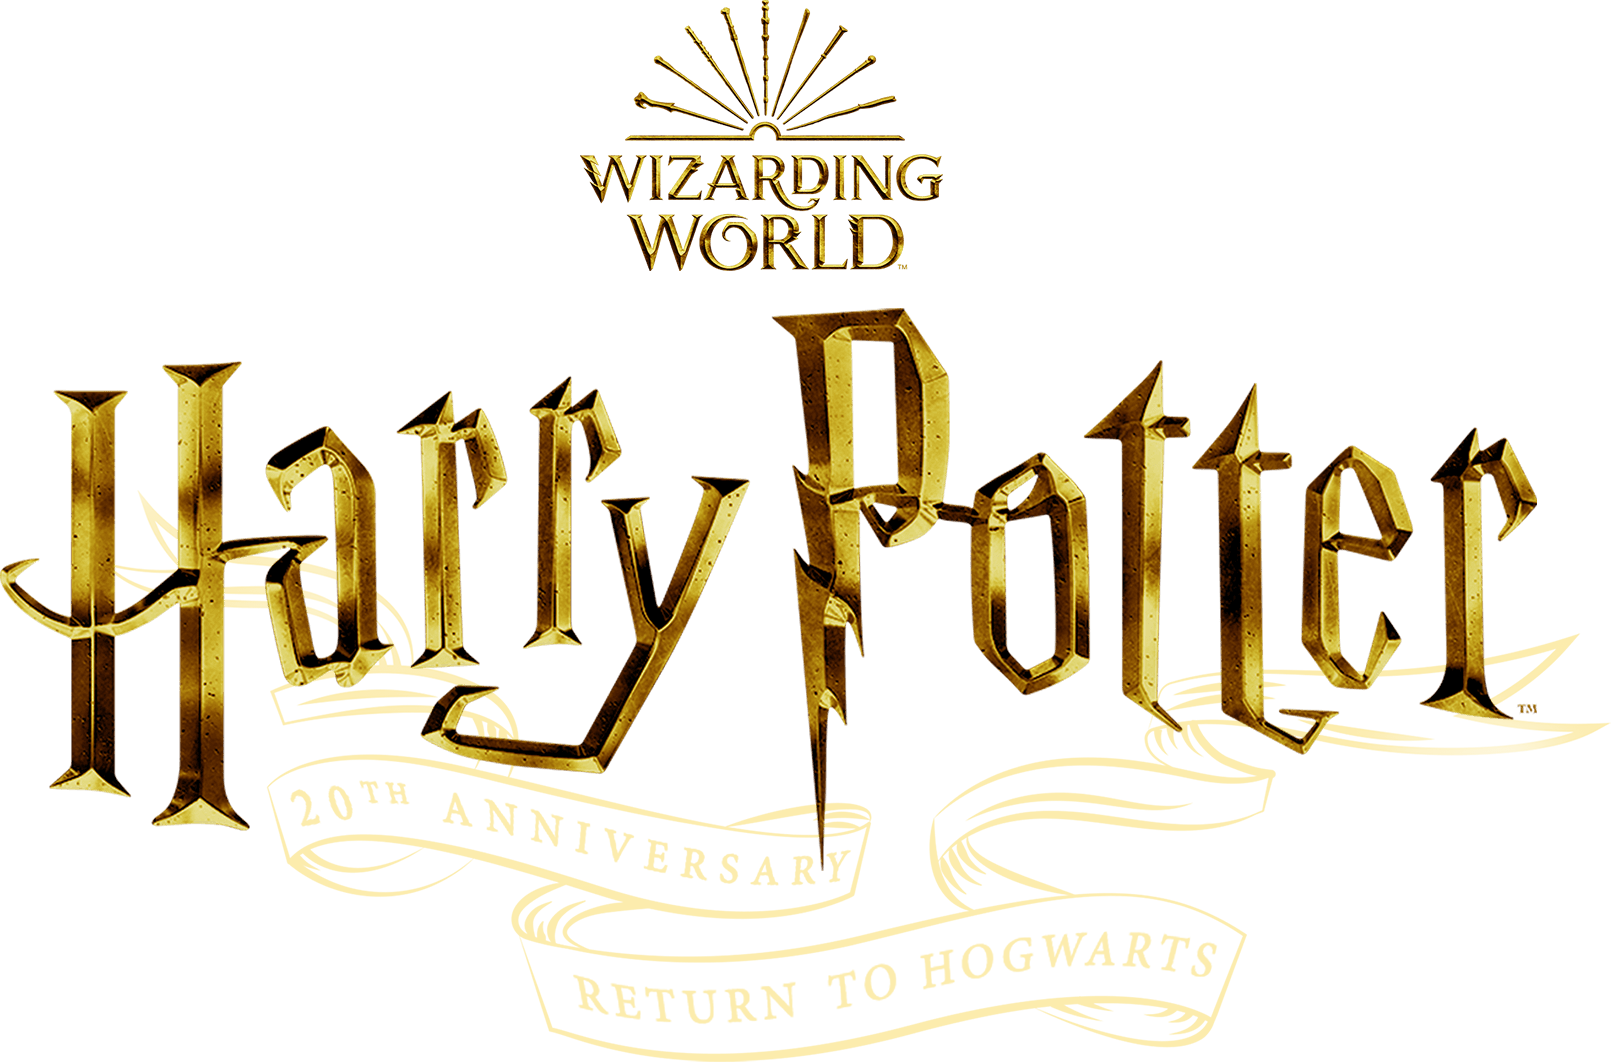 Harry Potter 20th Anniversary: Return to Hogwarts logo